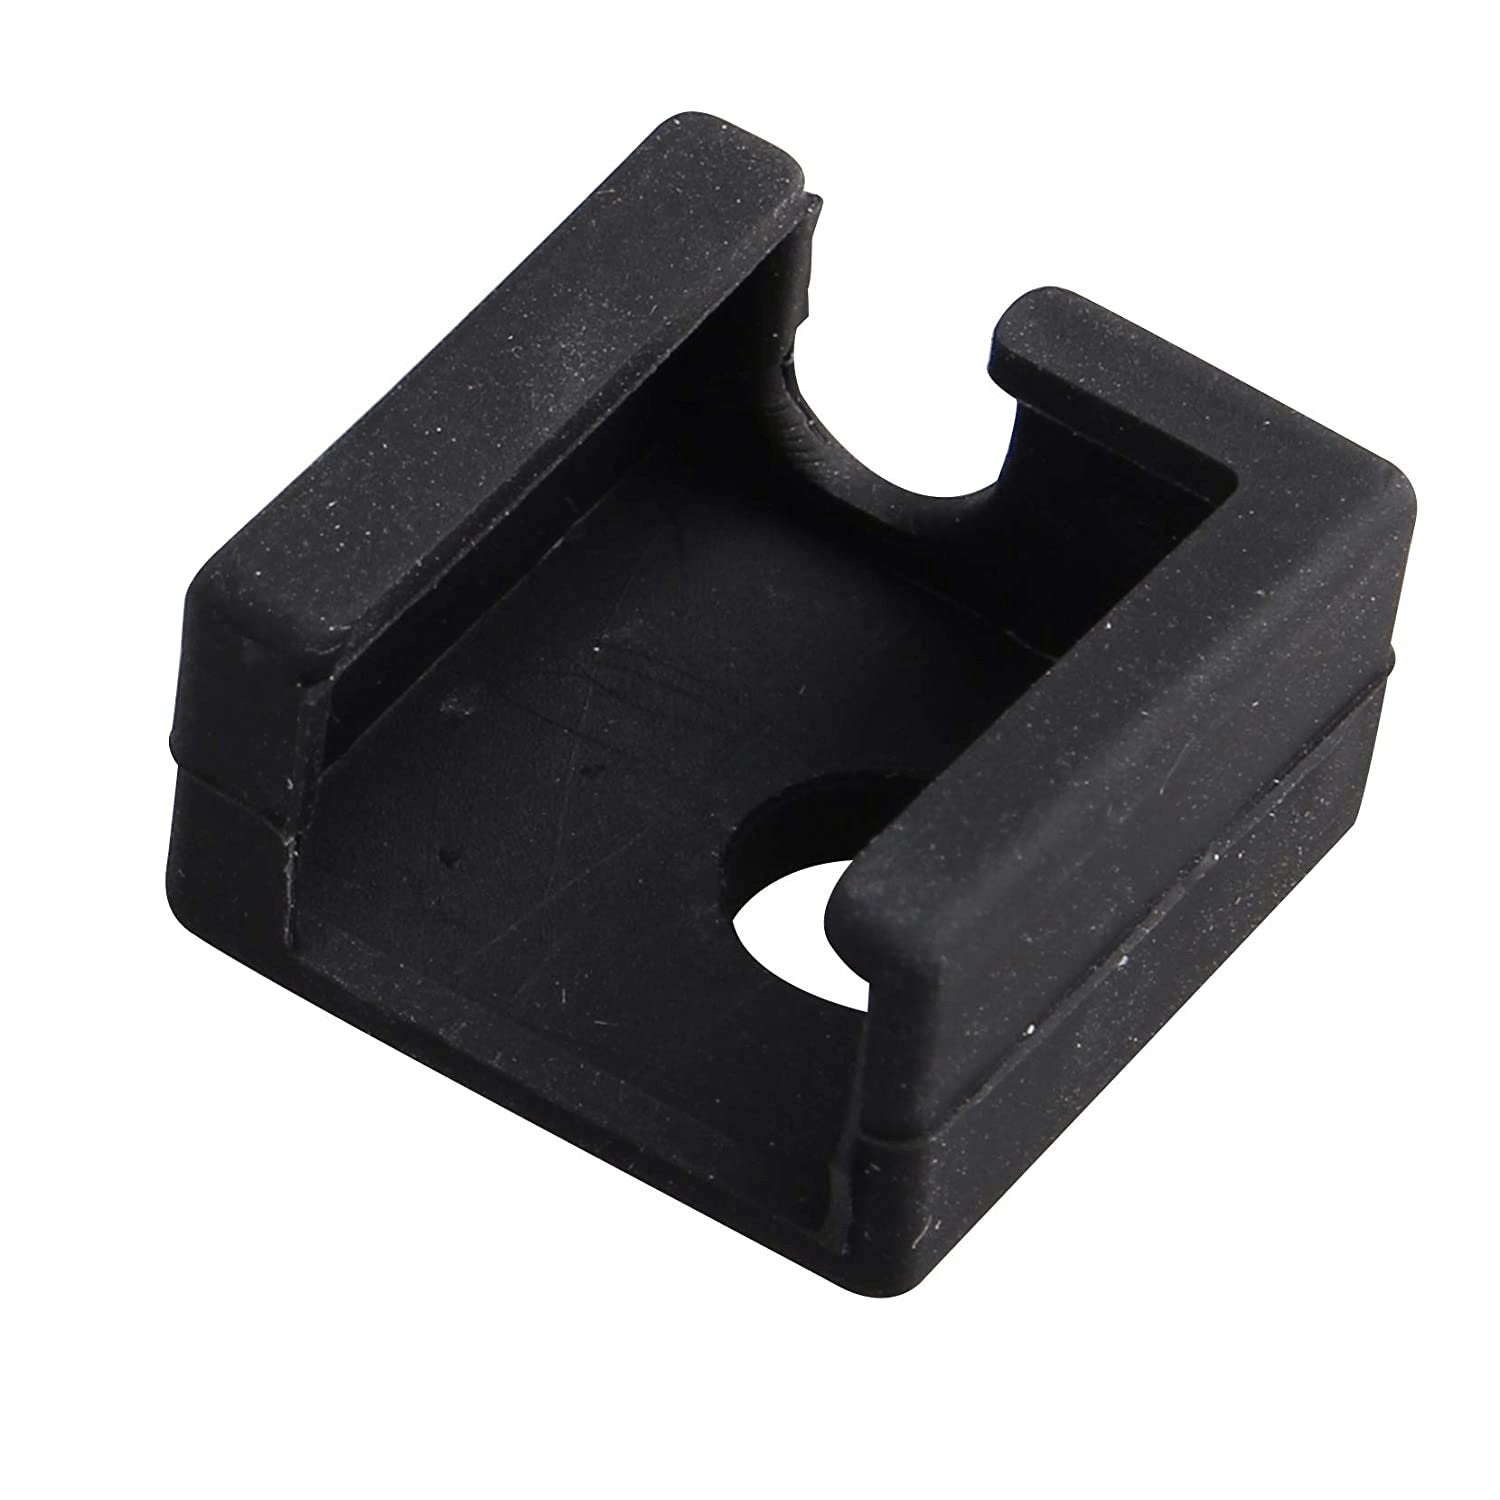 1pc Black MK8 Hotend Heating Block Silicone Cover Case